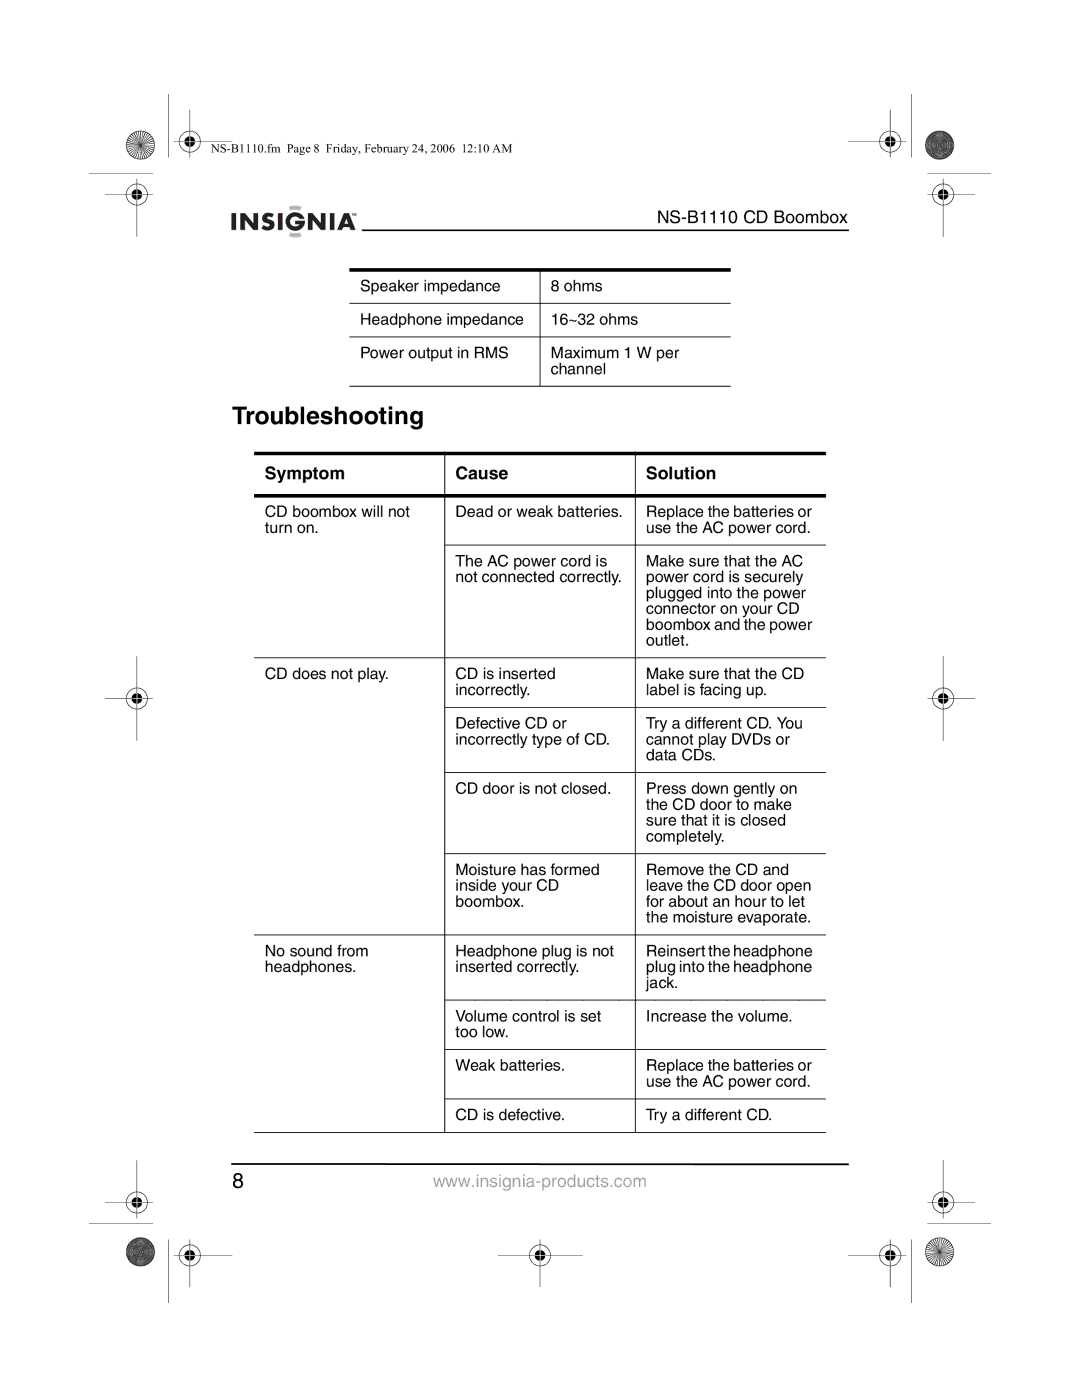 Insignia NS-B1110 manual Troubleshooting, Symptom Cause Solution 